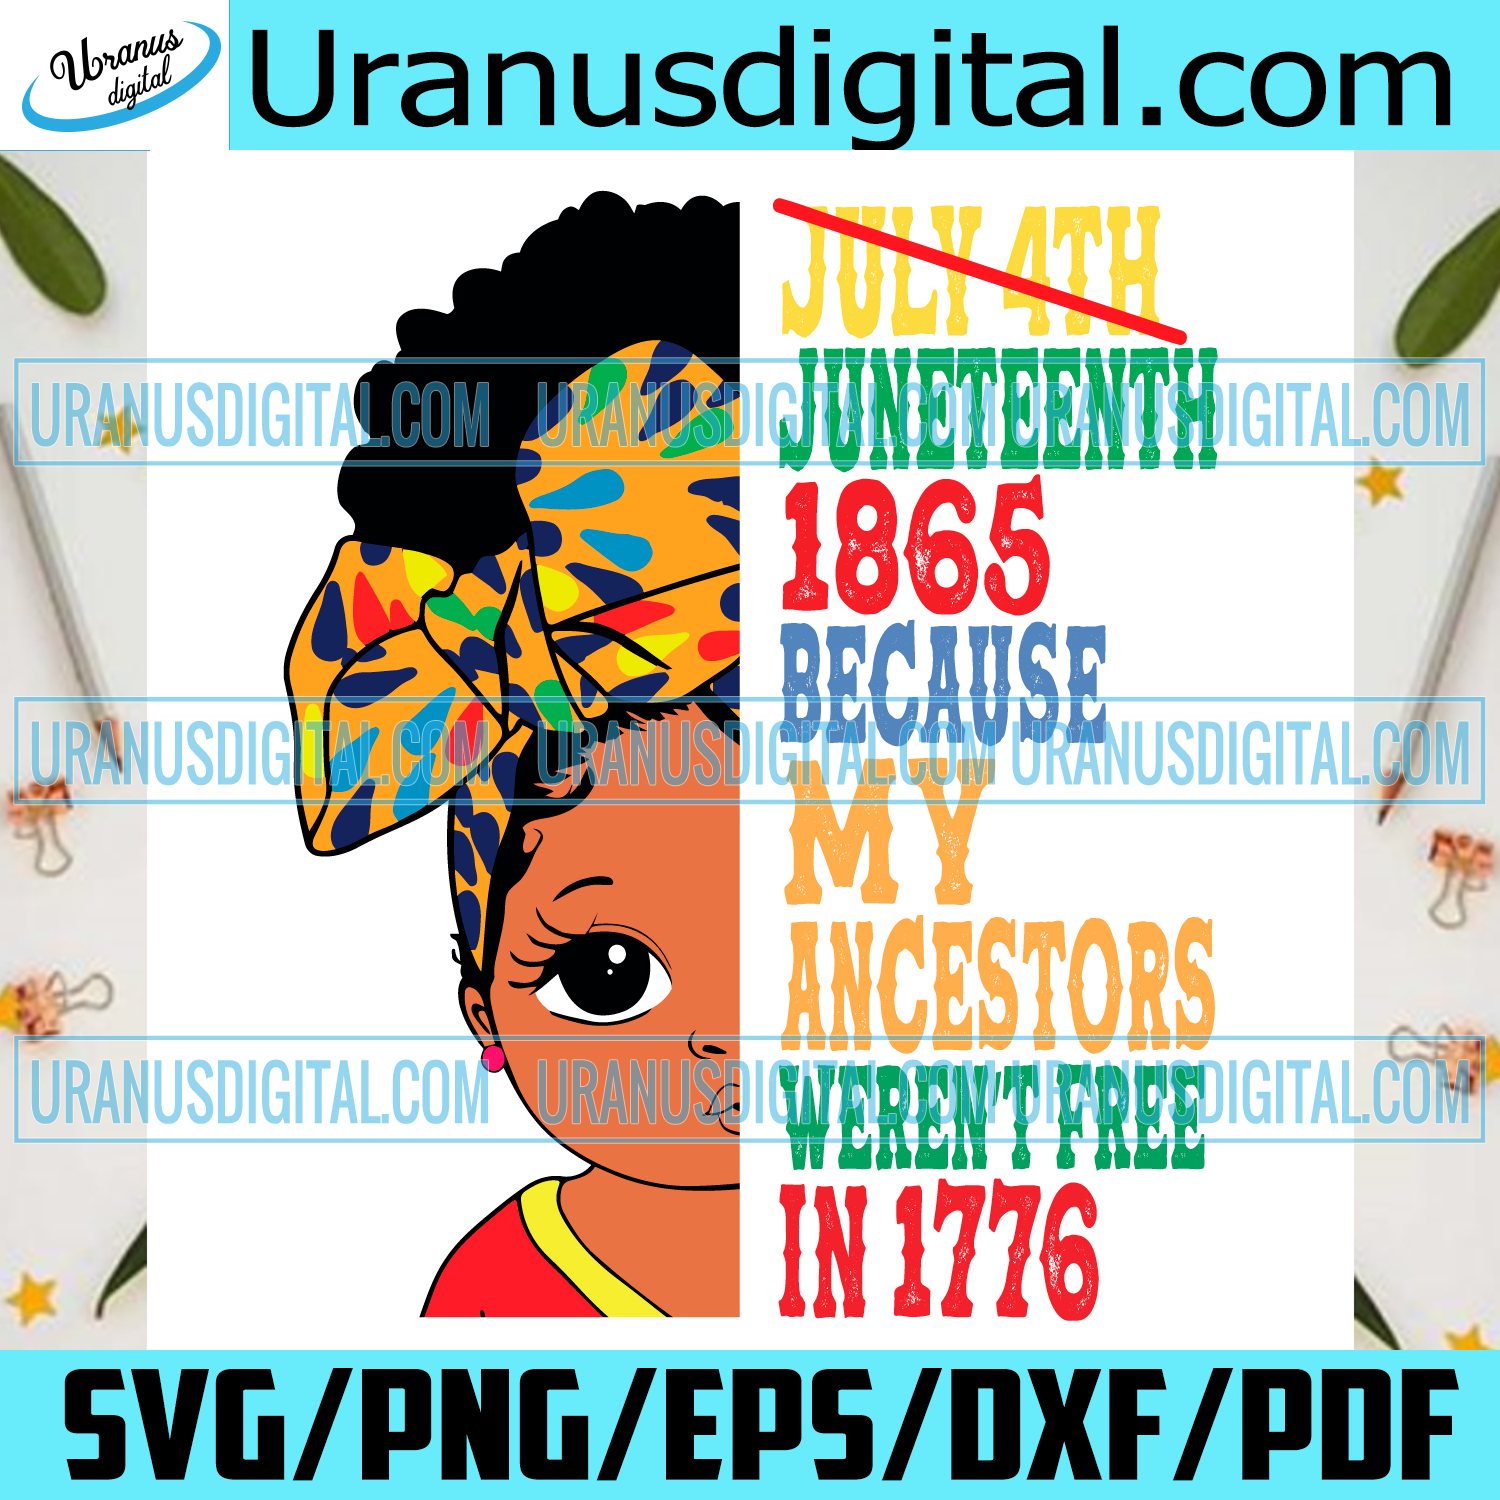 Download Not July 4th Juneteenth 1865 Because My Ancestors Werent Free In 1776 Uranusdigital